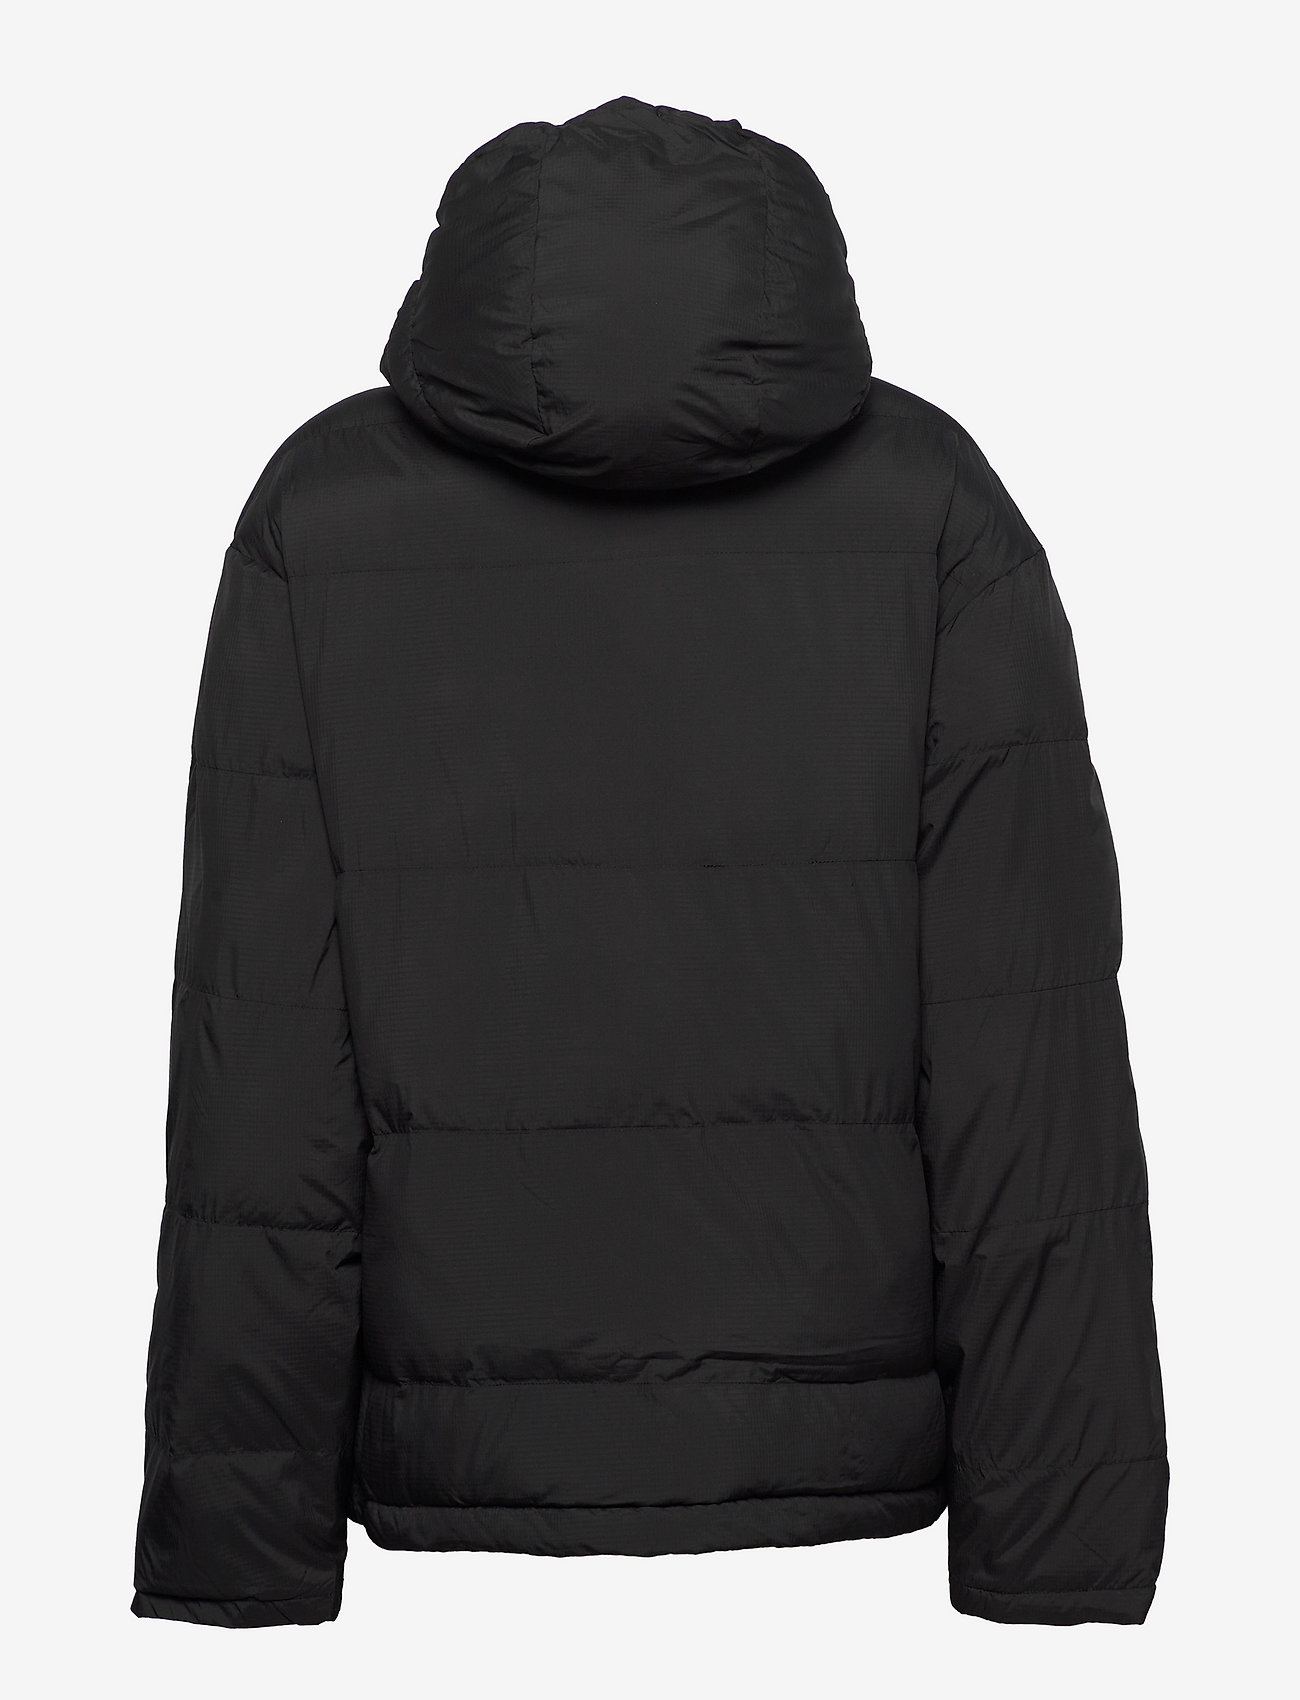 Soulland - Cara jacket - winter jacket - black - 1